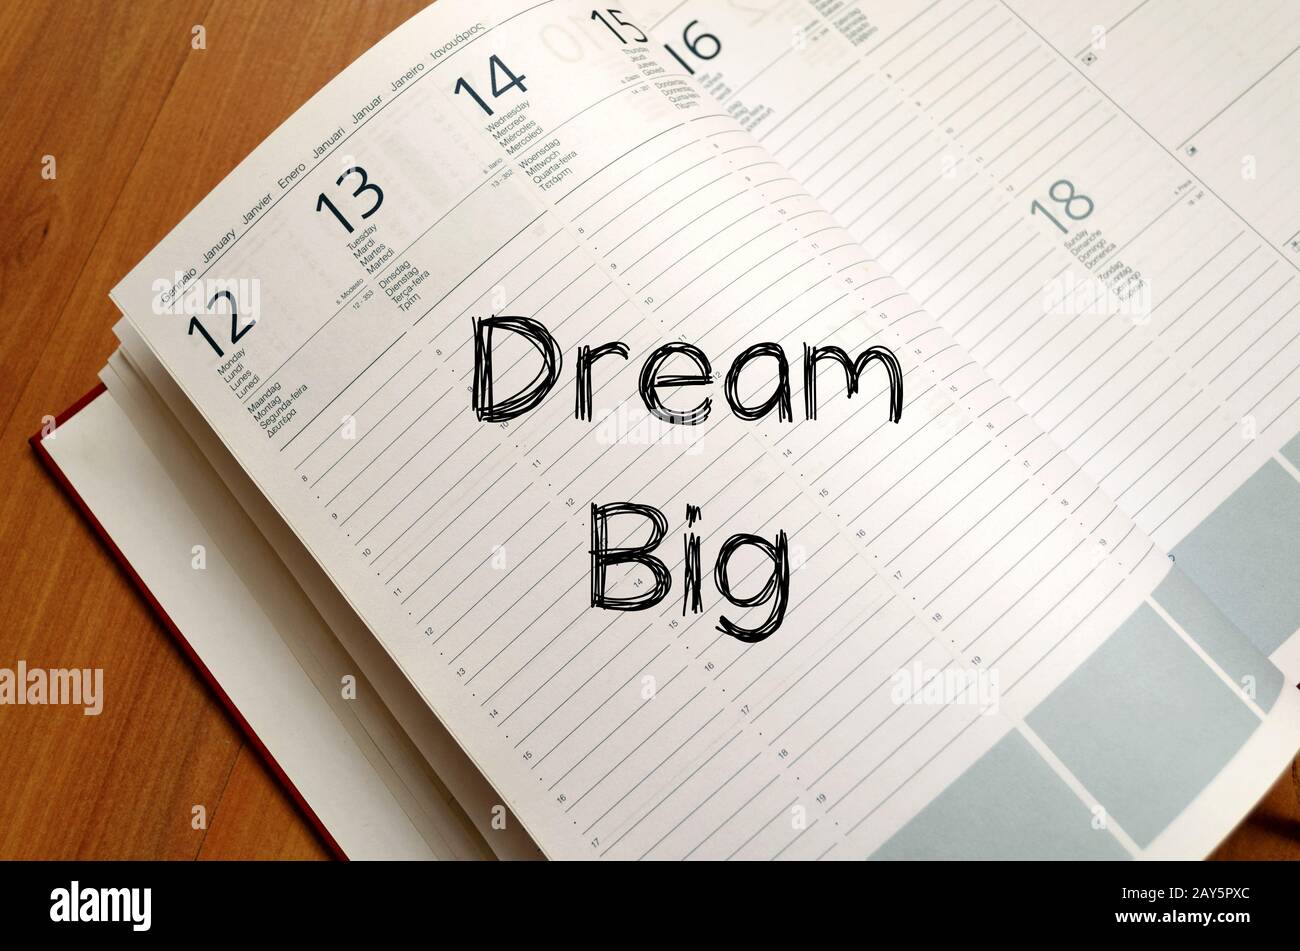 Dream big write on notebook Stock Photo - Alamy